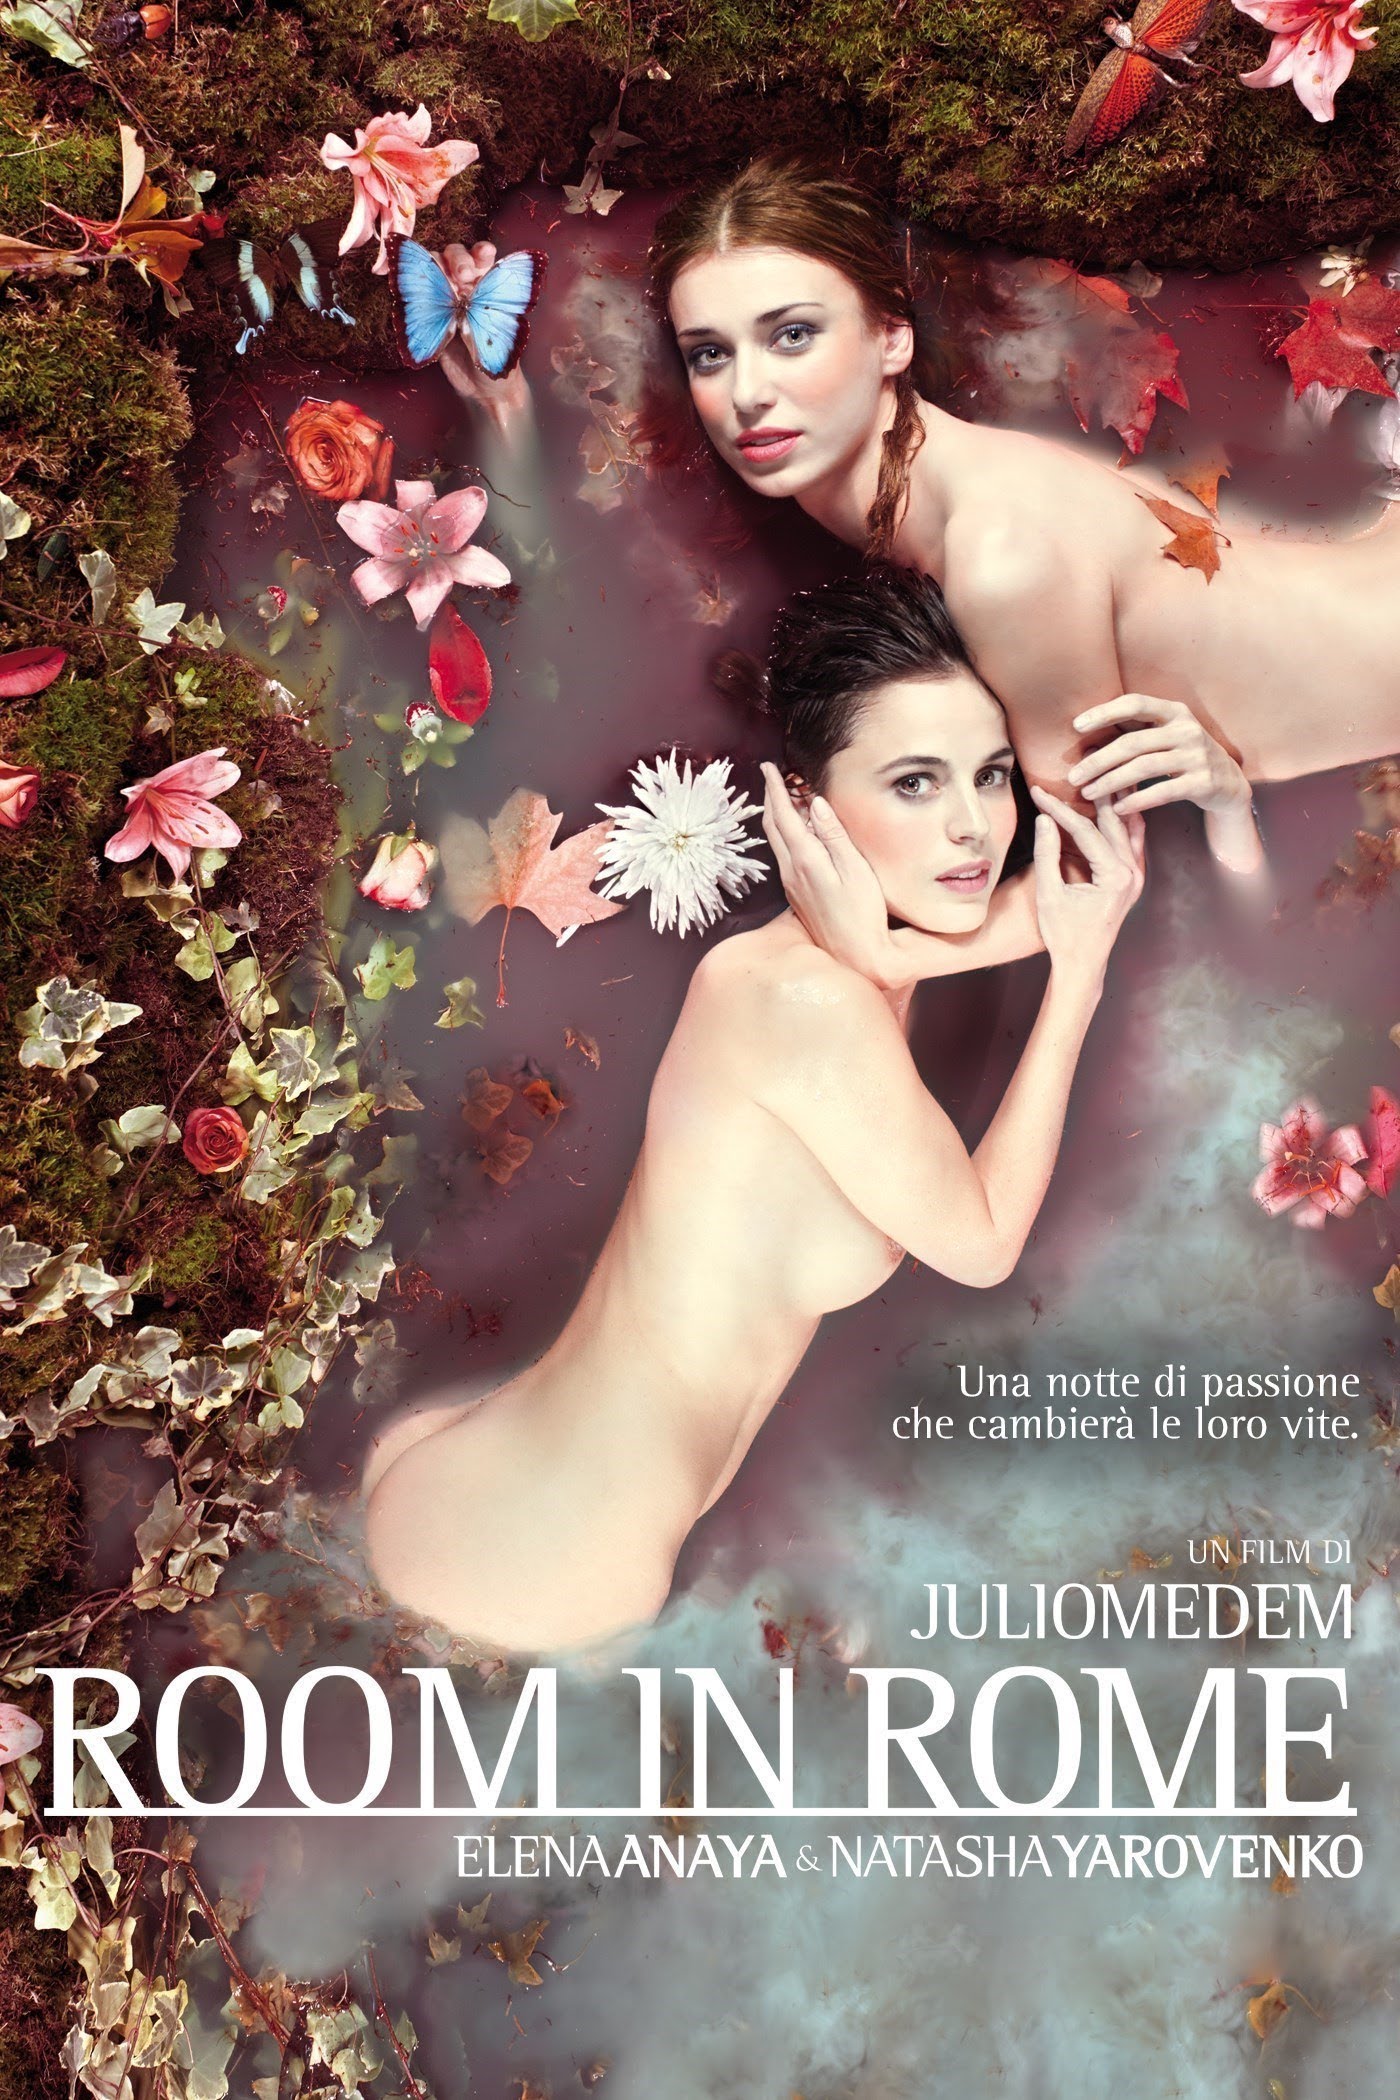 Room in Rome [HD] (2010)